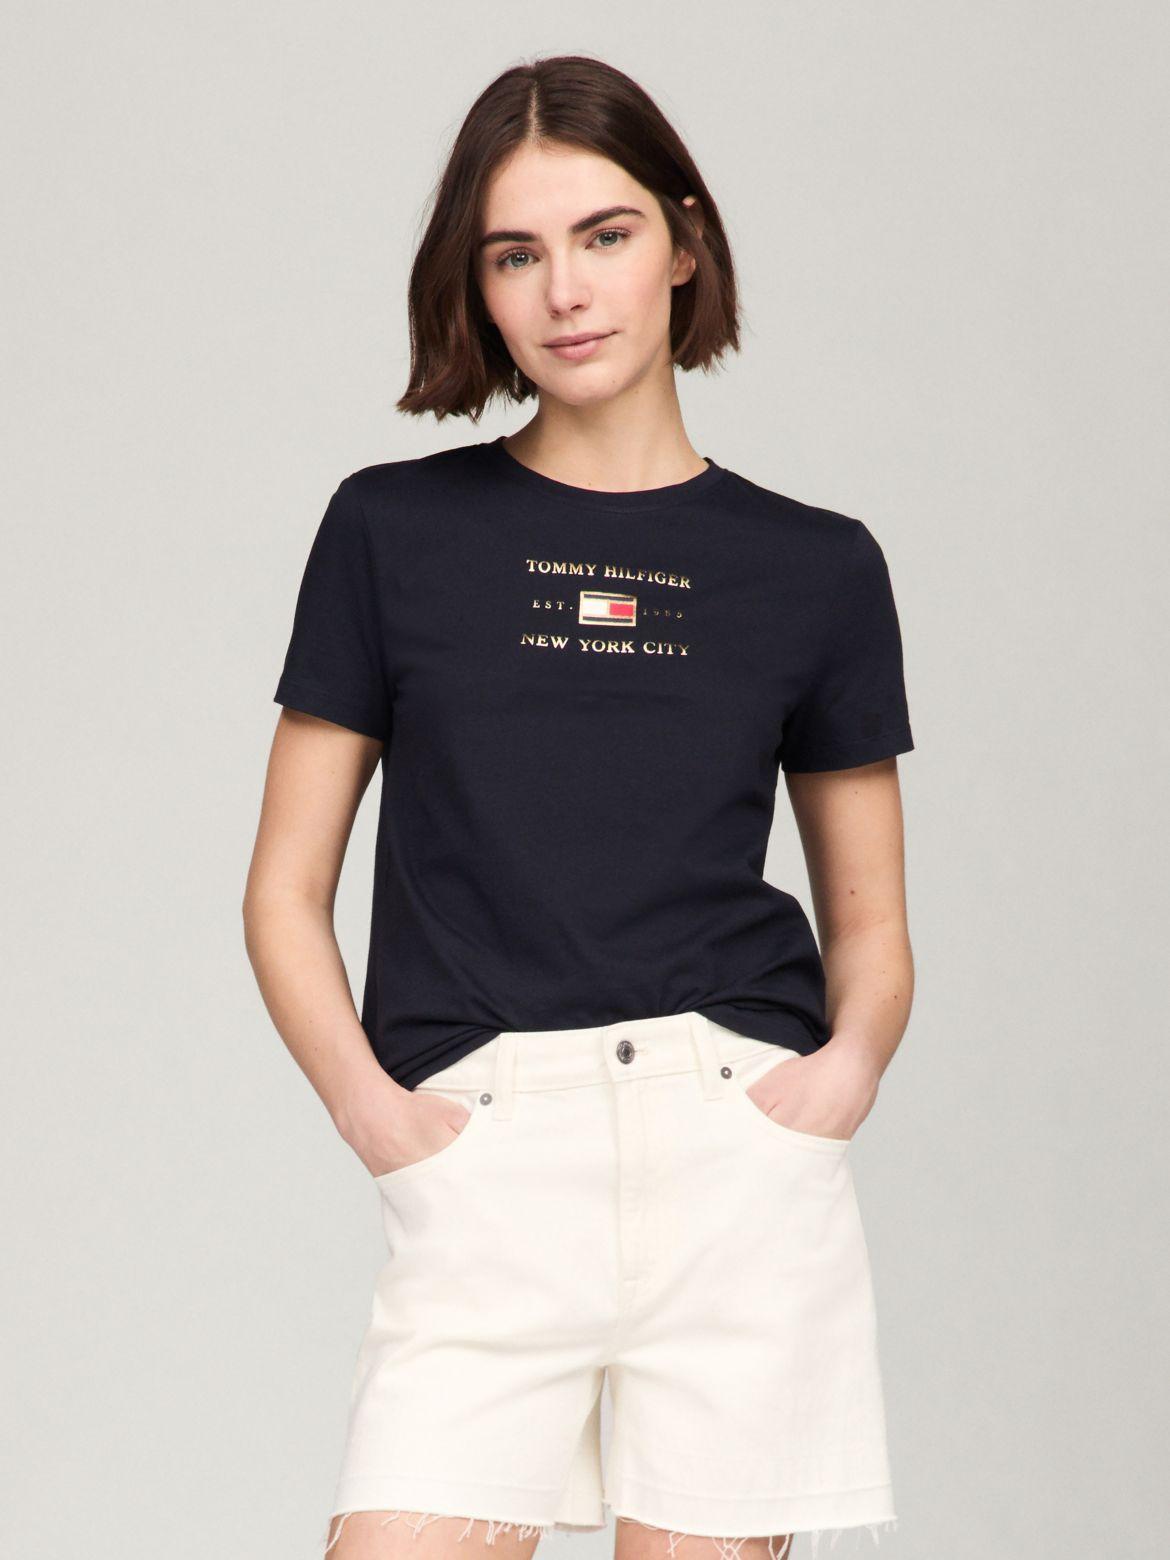 Tommy Hilfiger Women's Metallic Hilfiger Logo T-Shirt Product Image